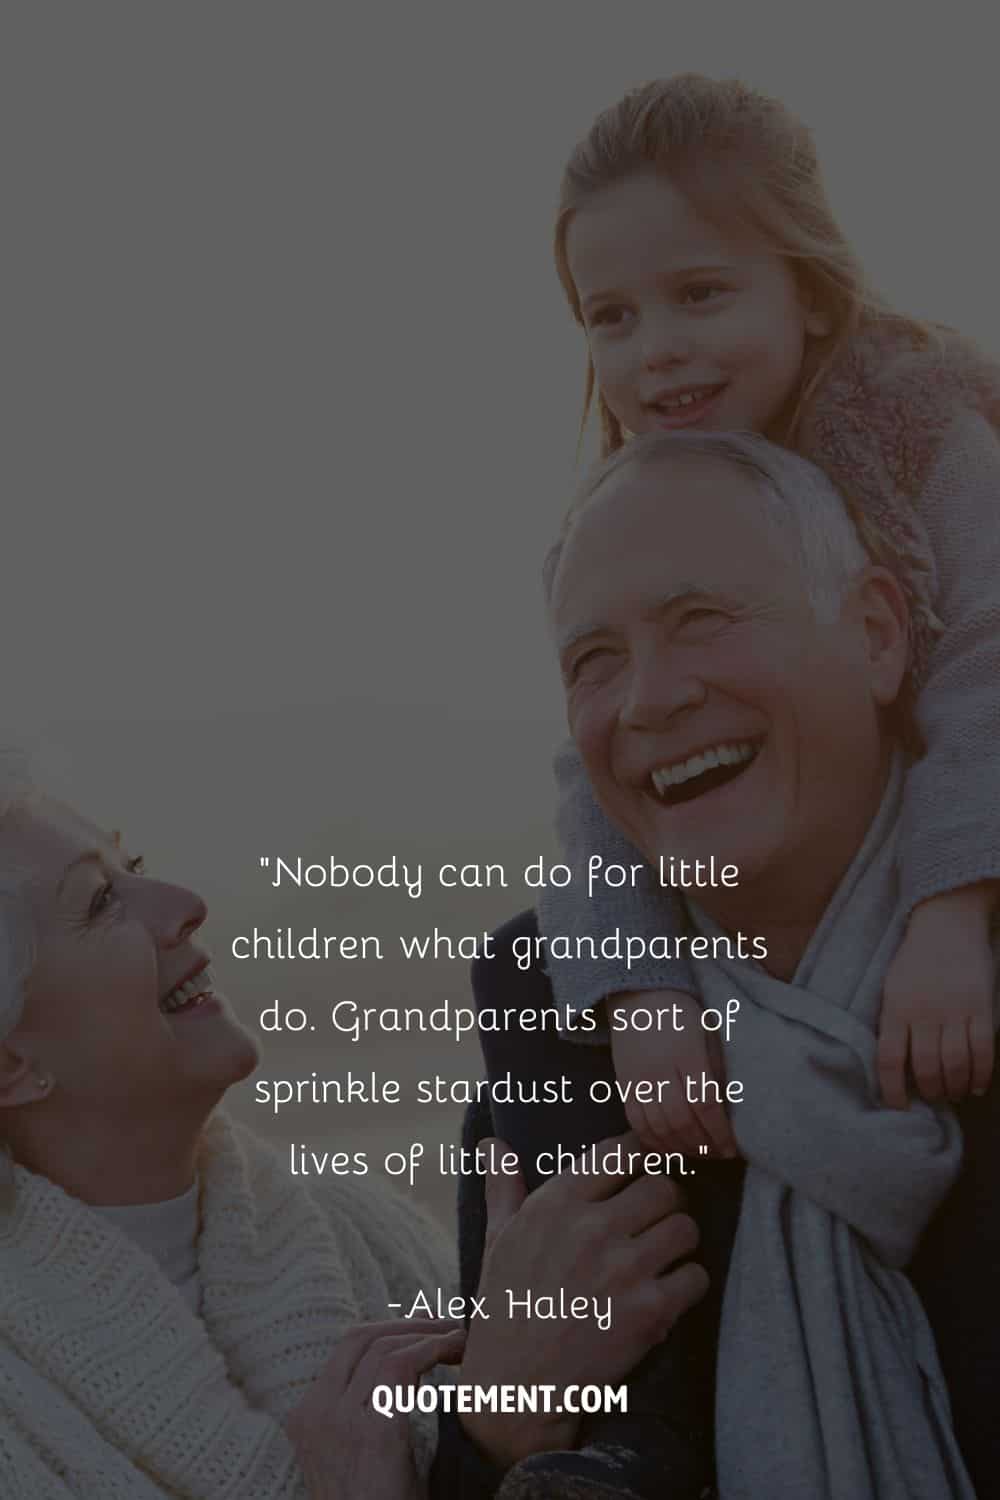 smiling grandparents with granddaughter representing the greatest grandchildren quote